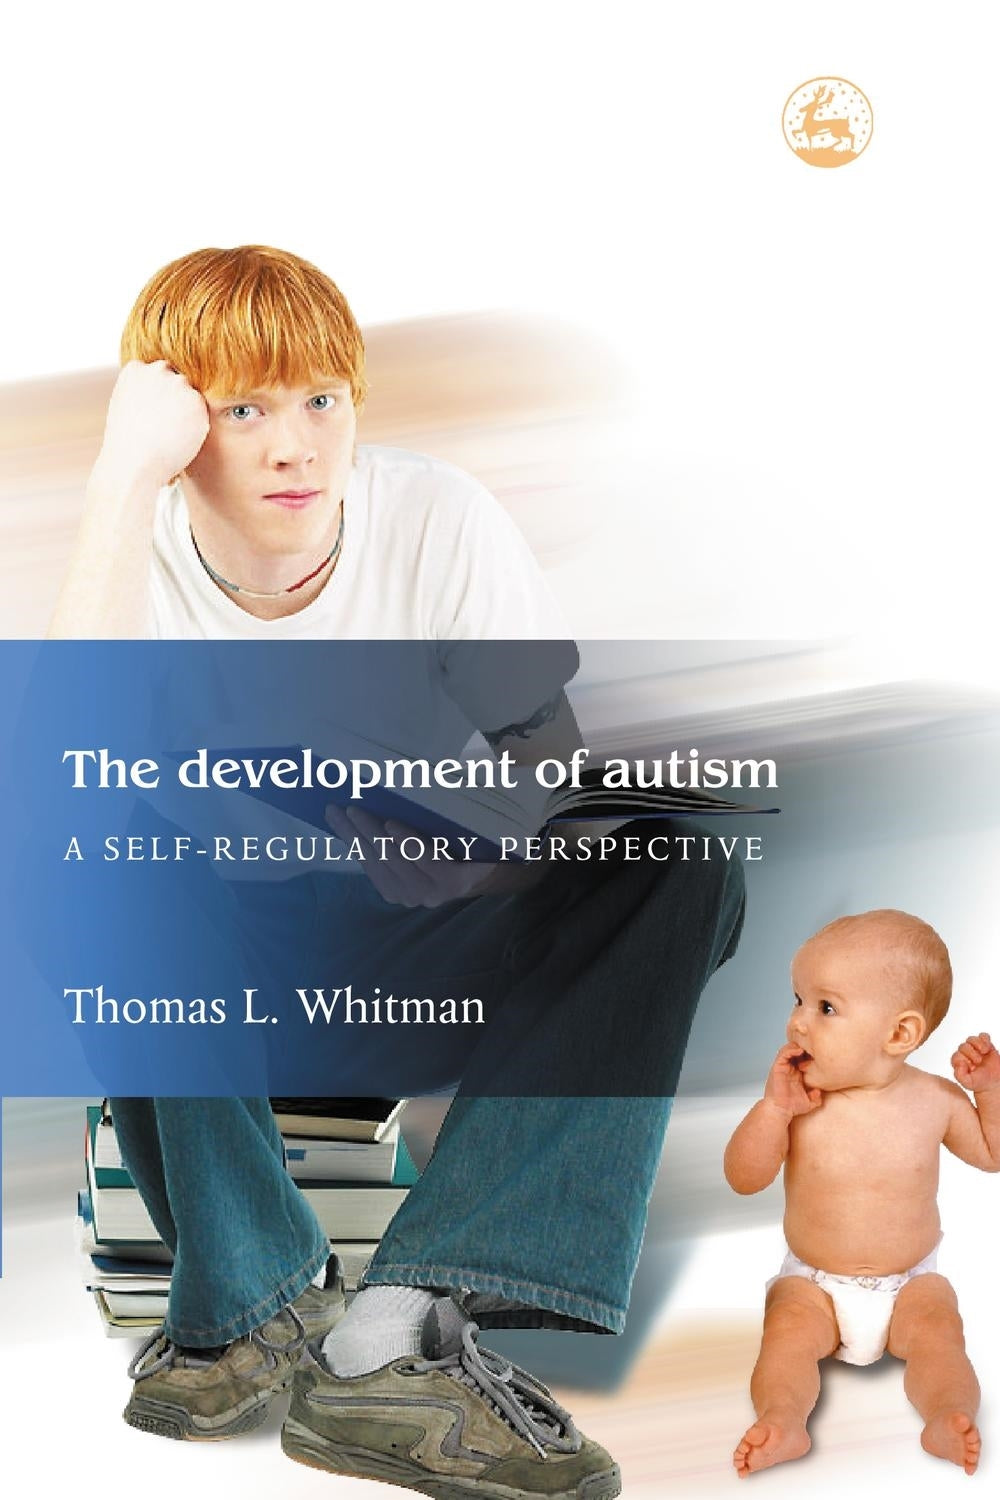 The Development of Autism by Thomas L. Whitman